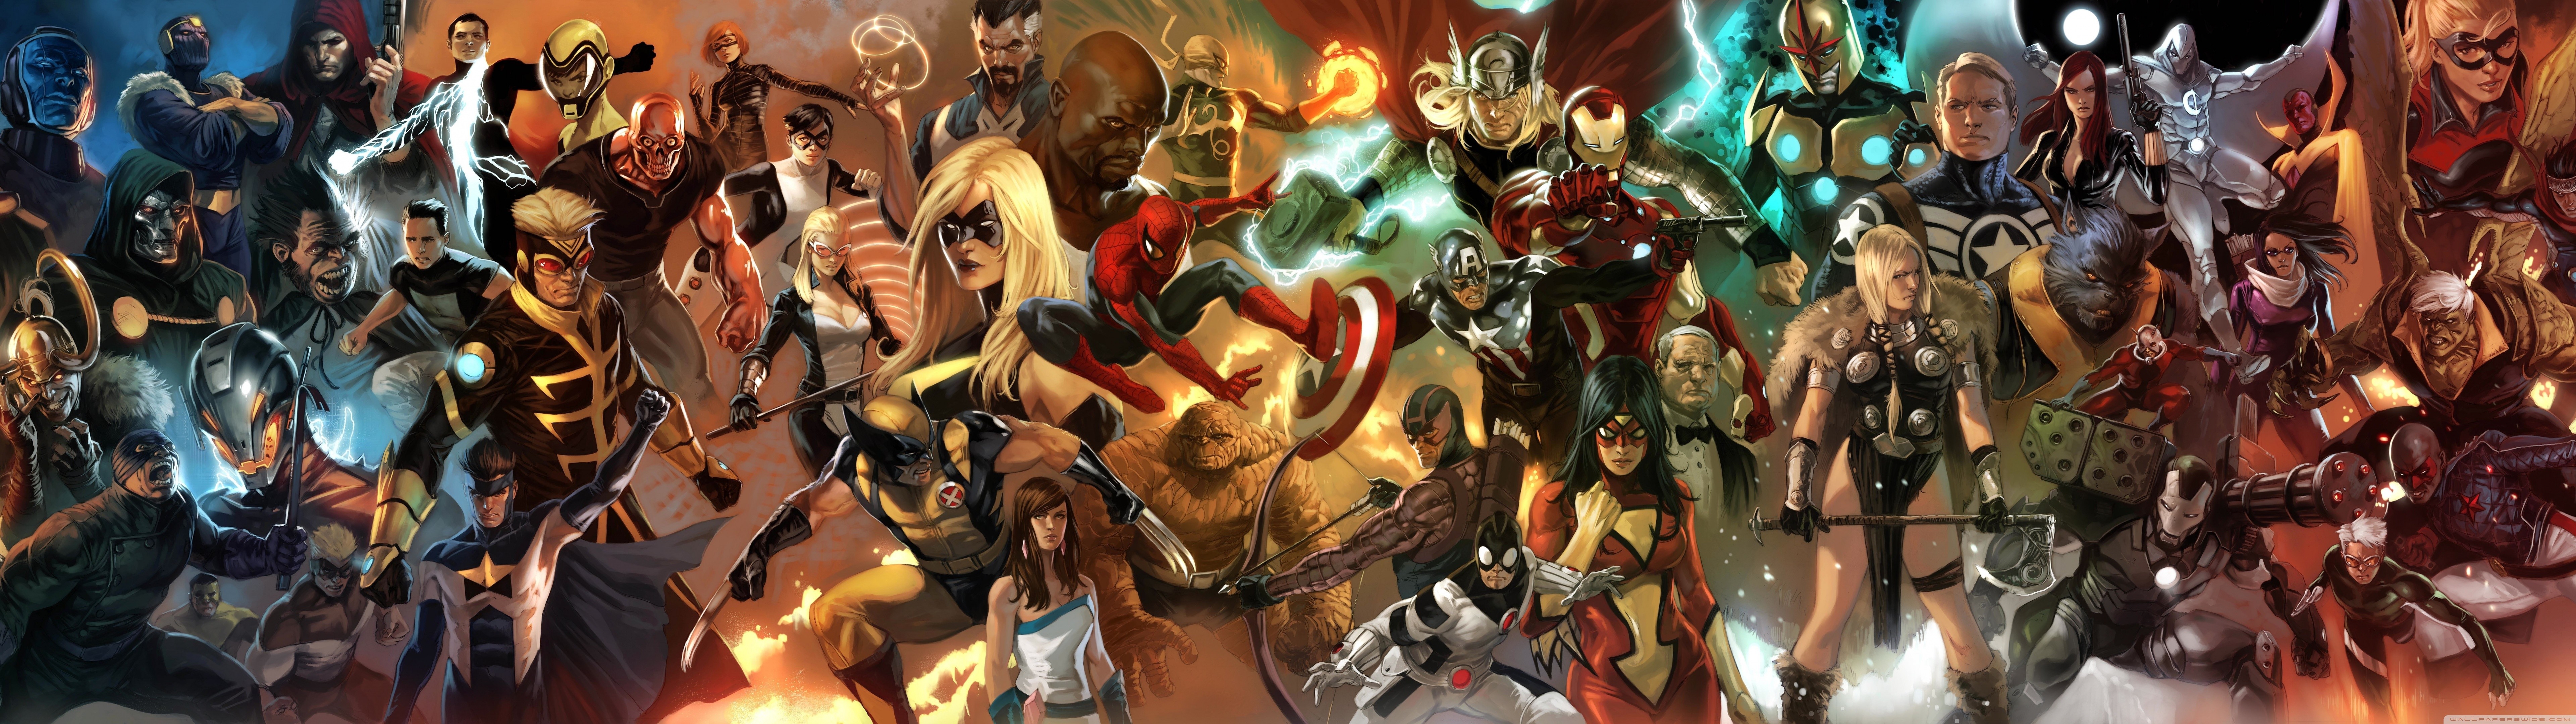 Comics The Avengers HD Wallpaper | Background Image